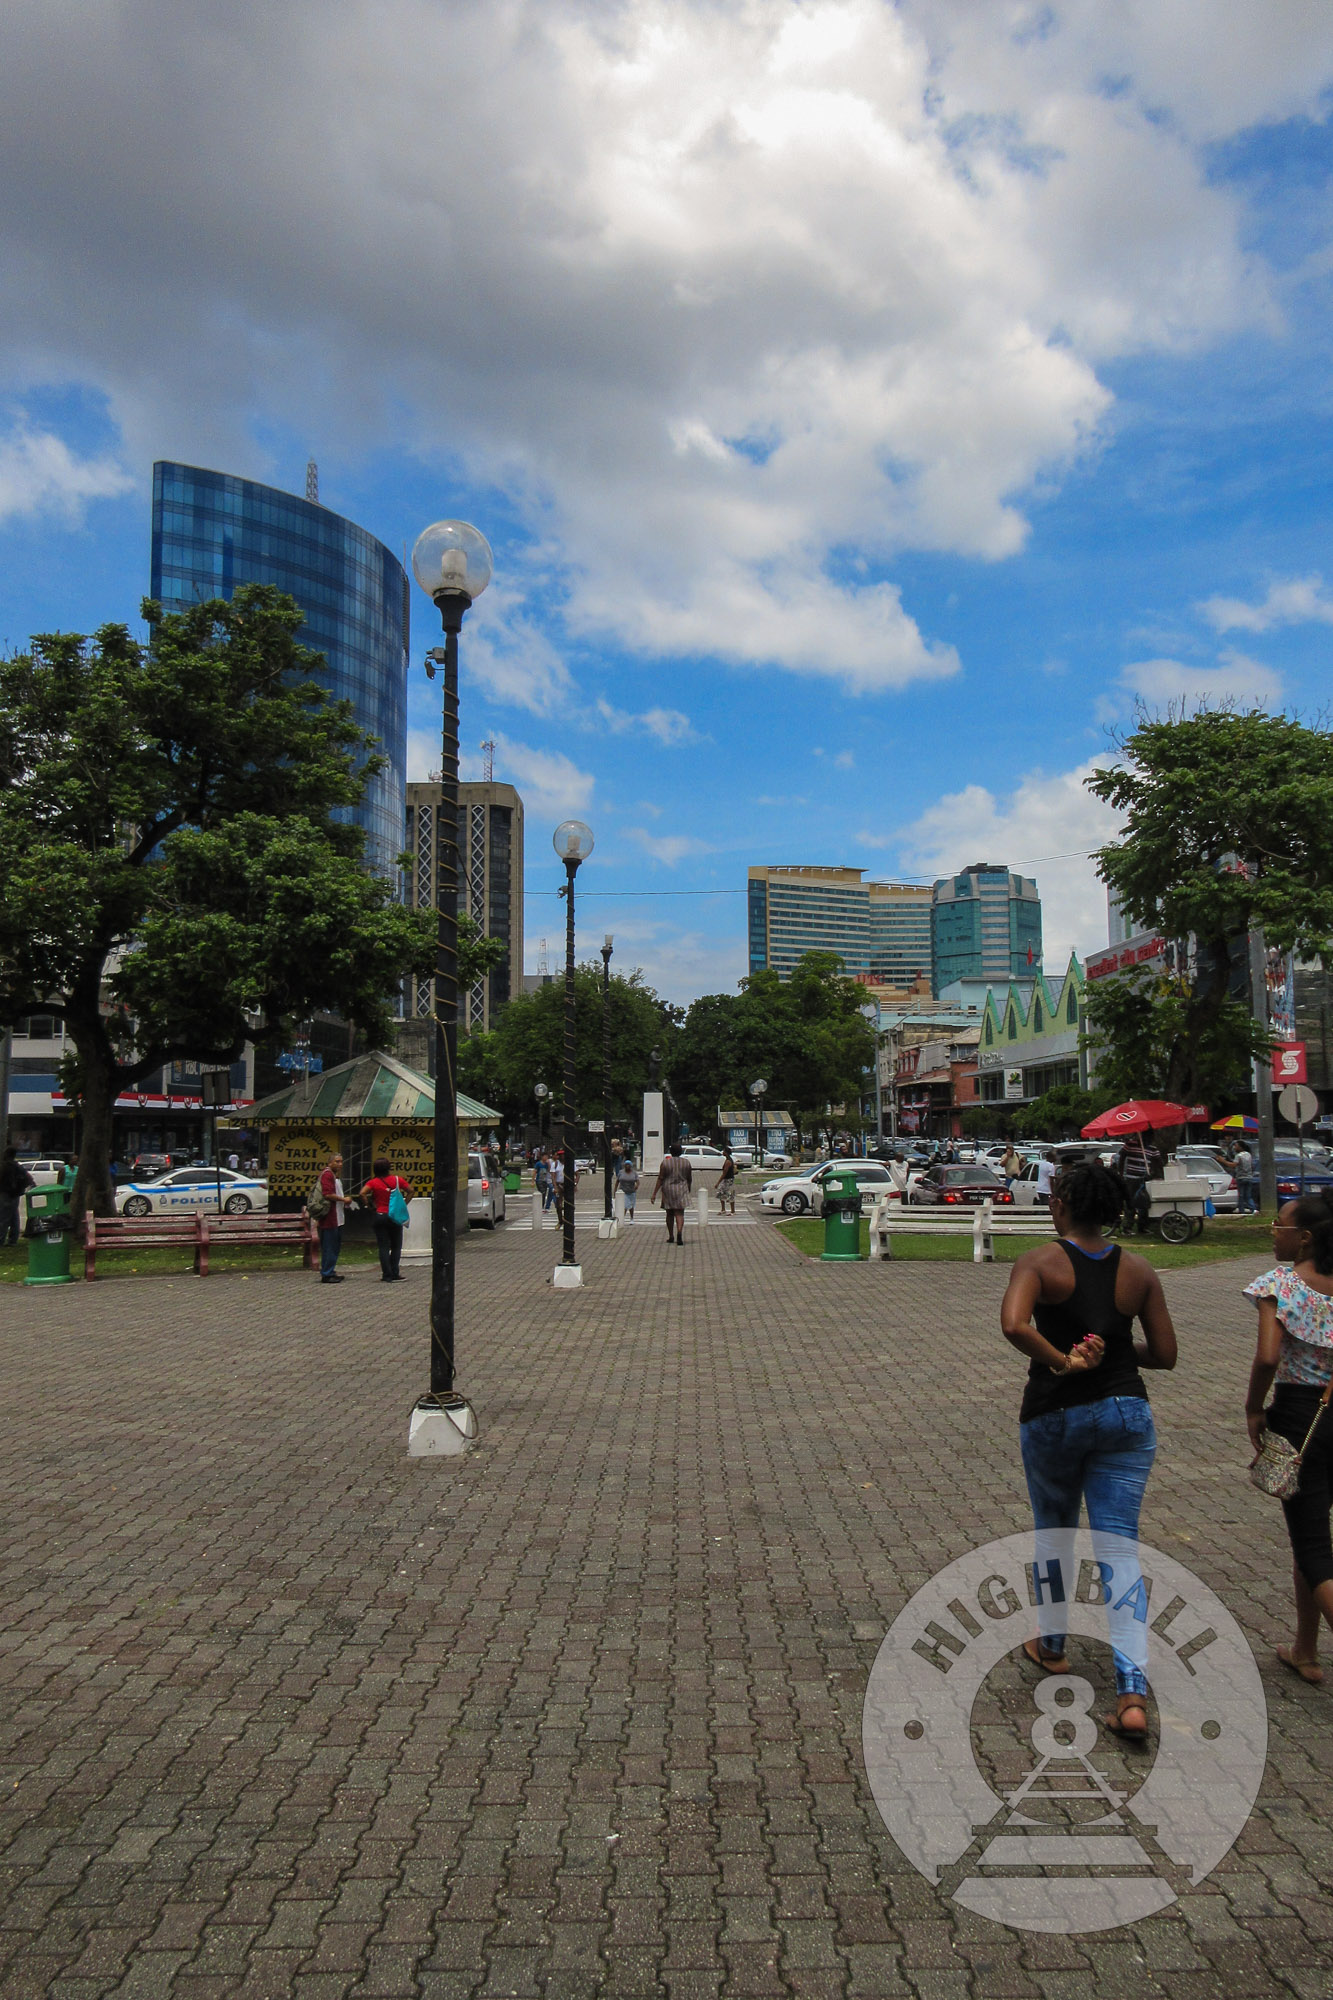 Independence Square, Port of Spain, Trinidad & Tobago, 2018.